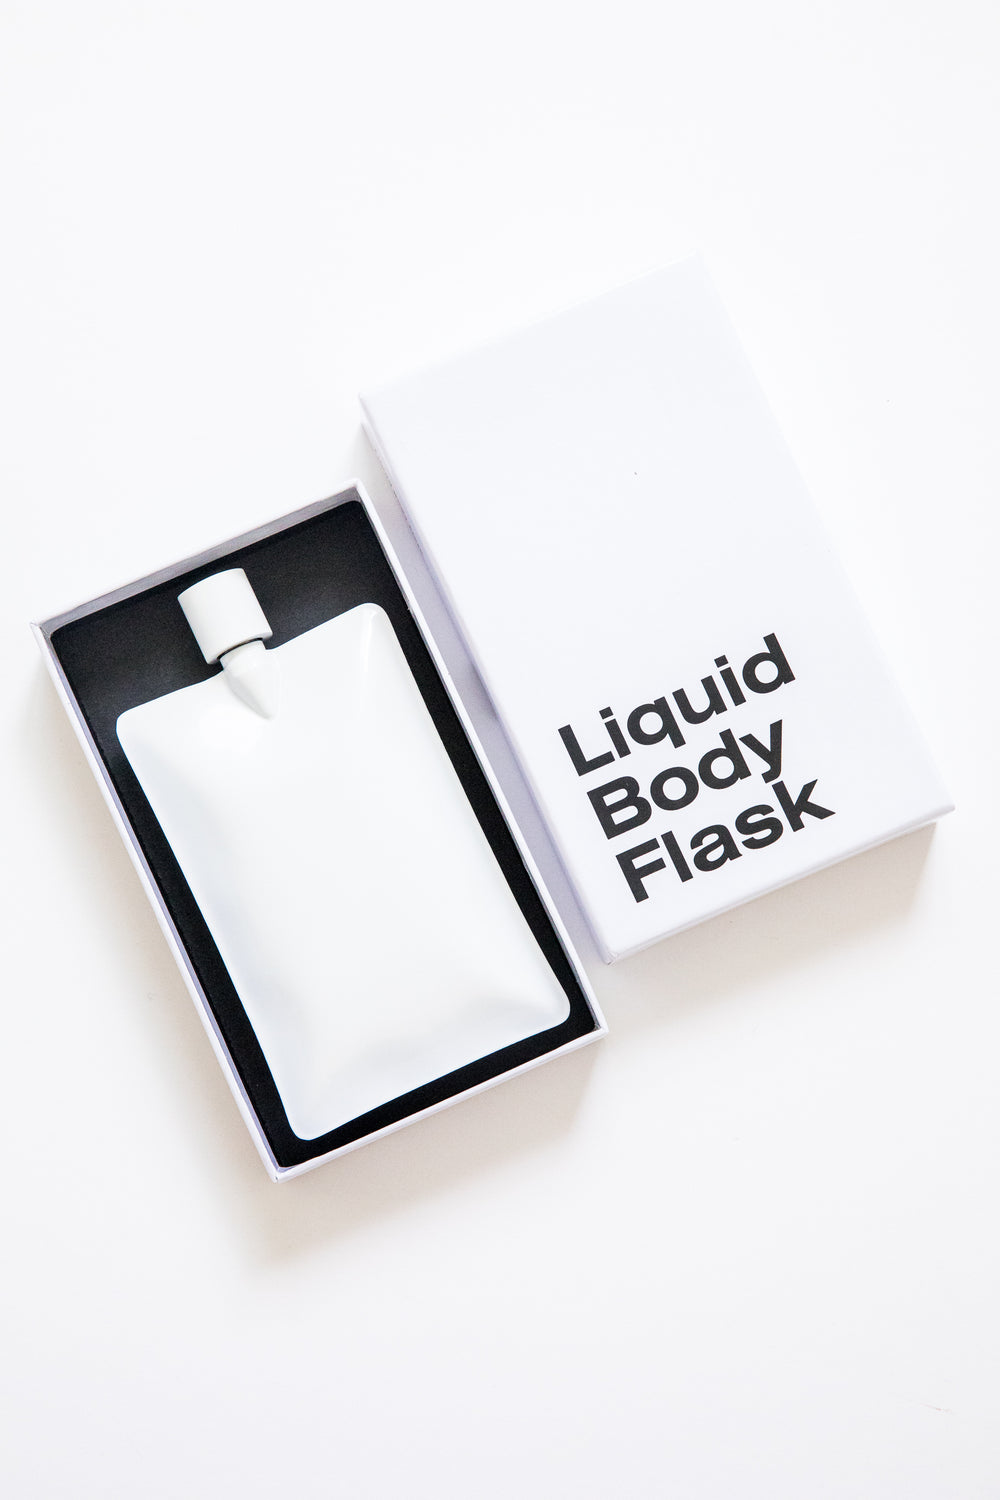 Liquid Body Flask